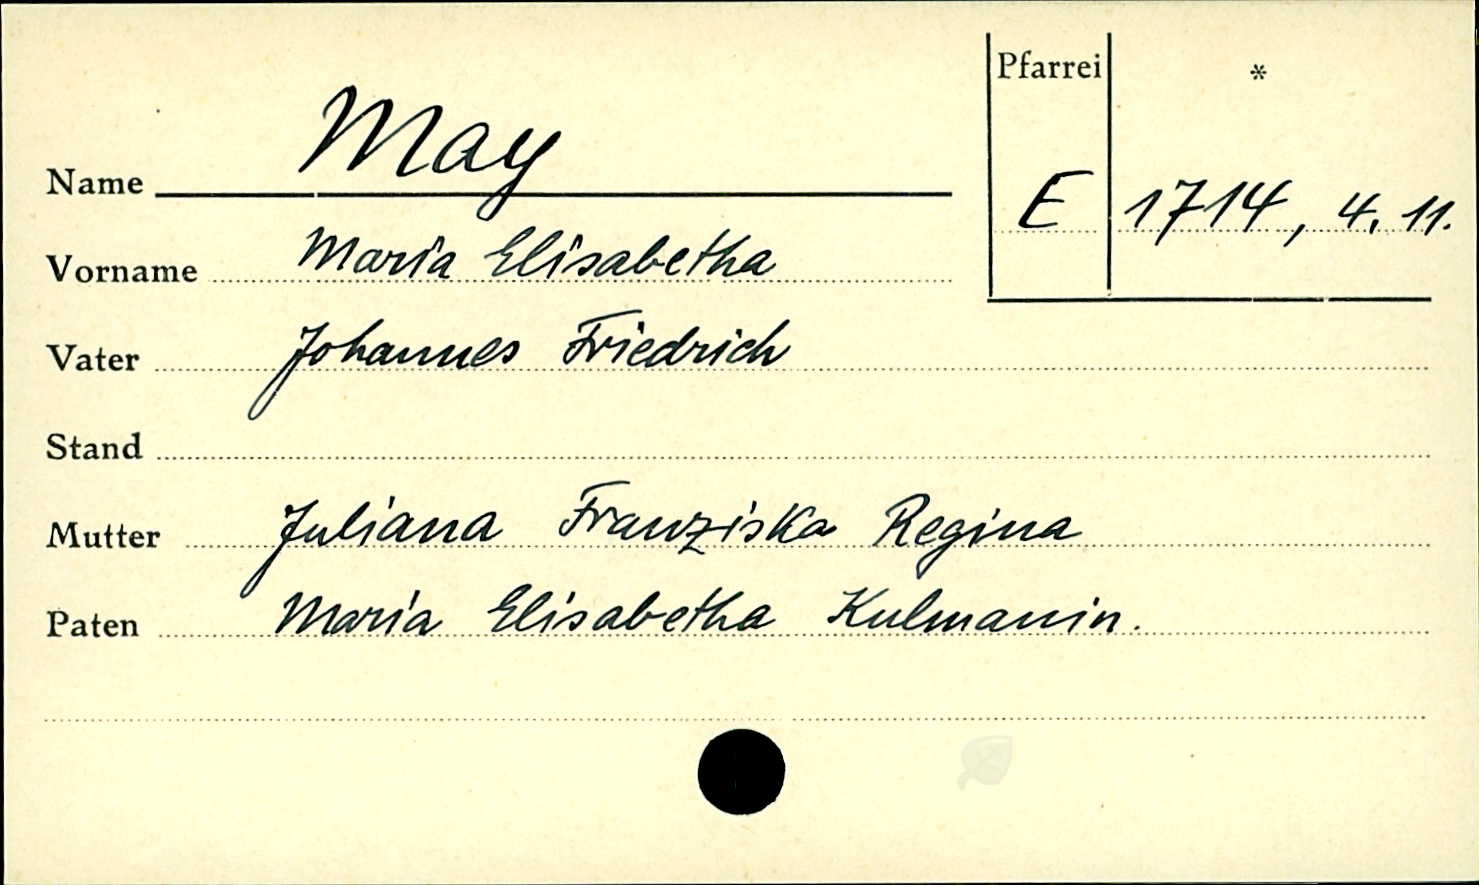 Christening record of Maria Elisabetha May